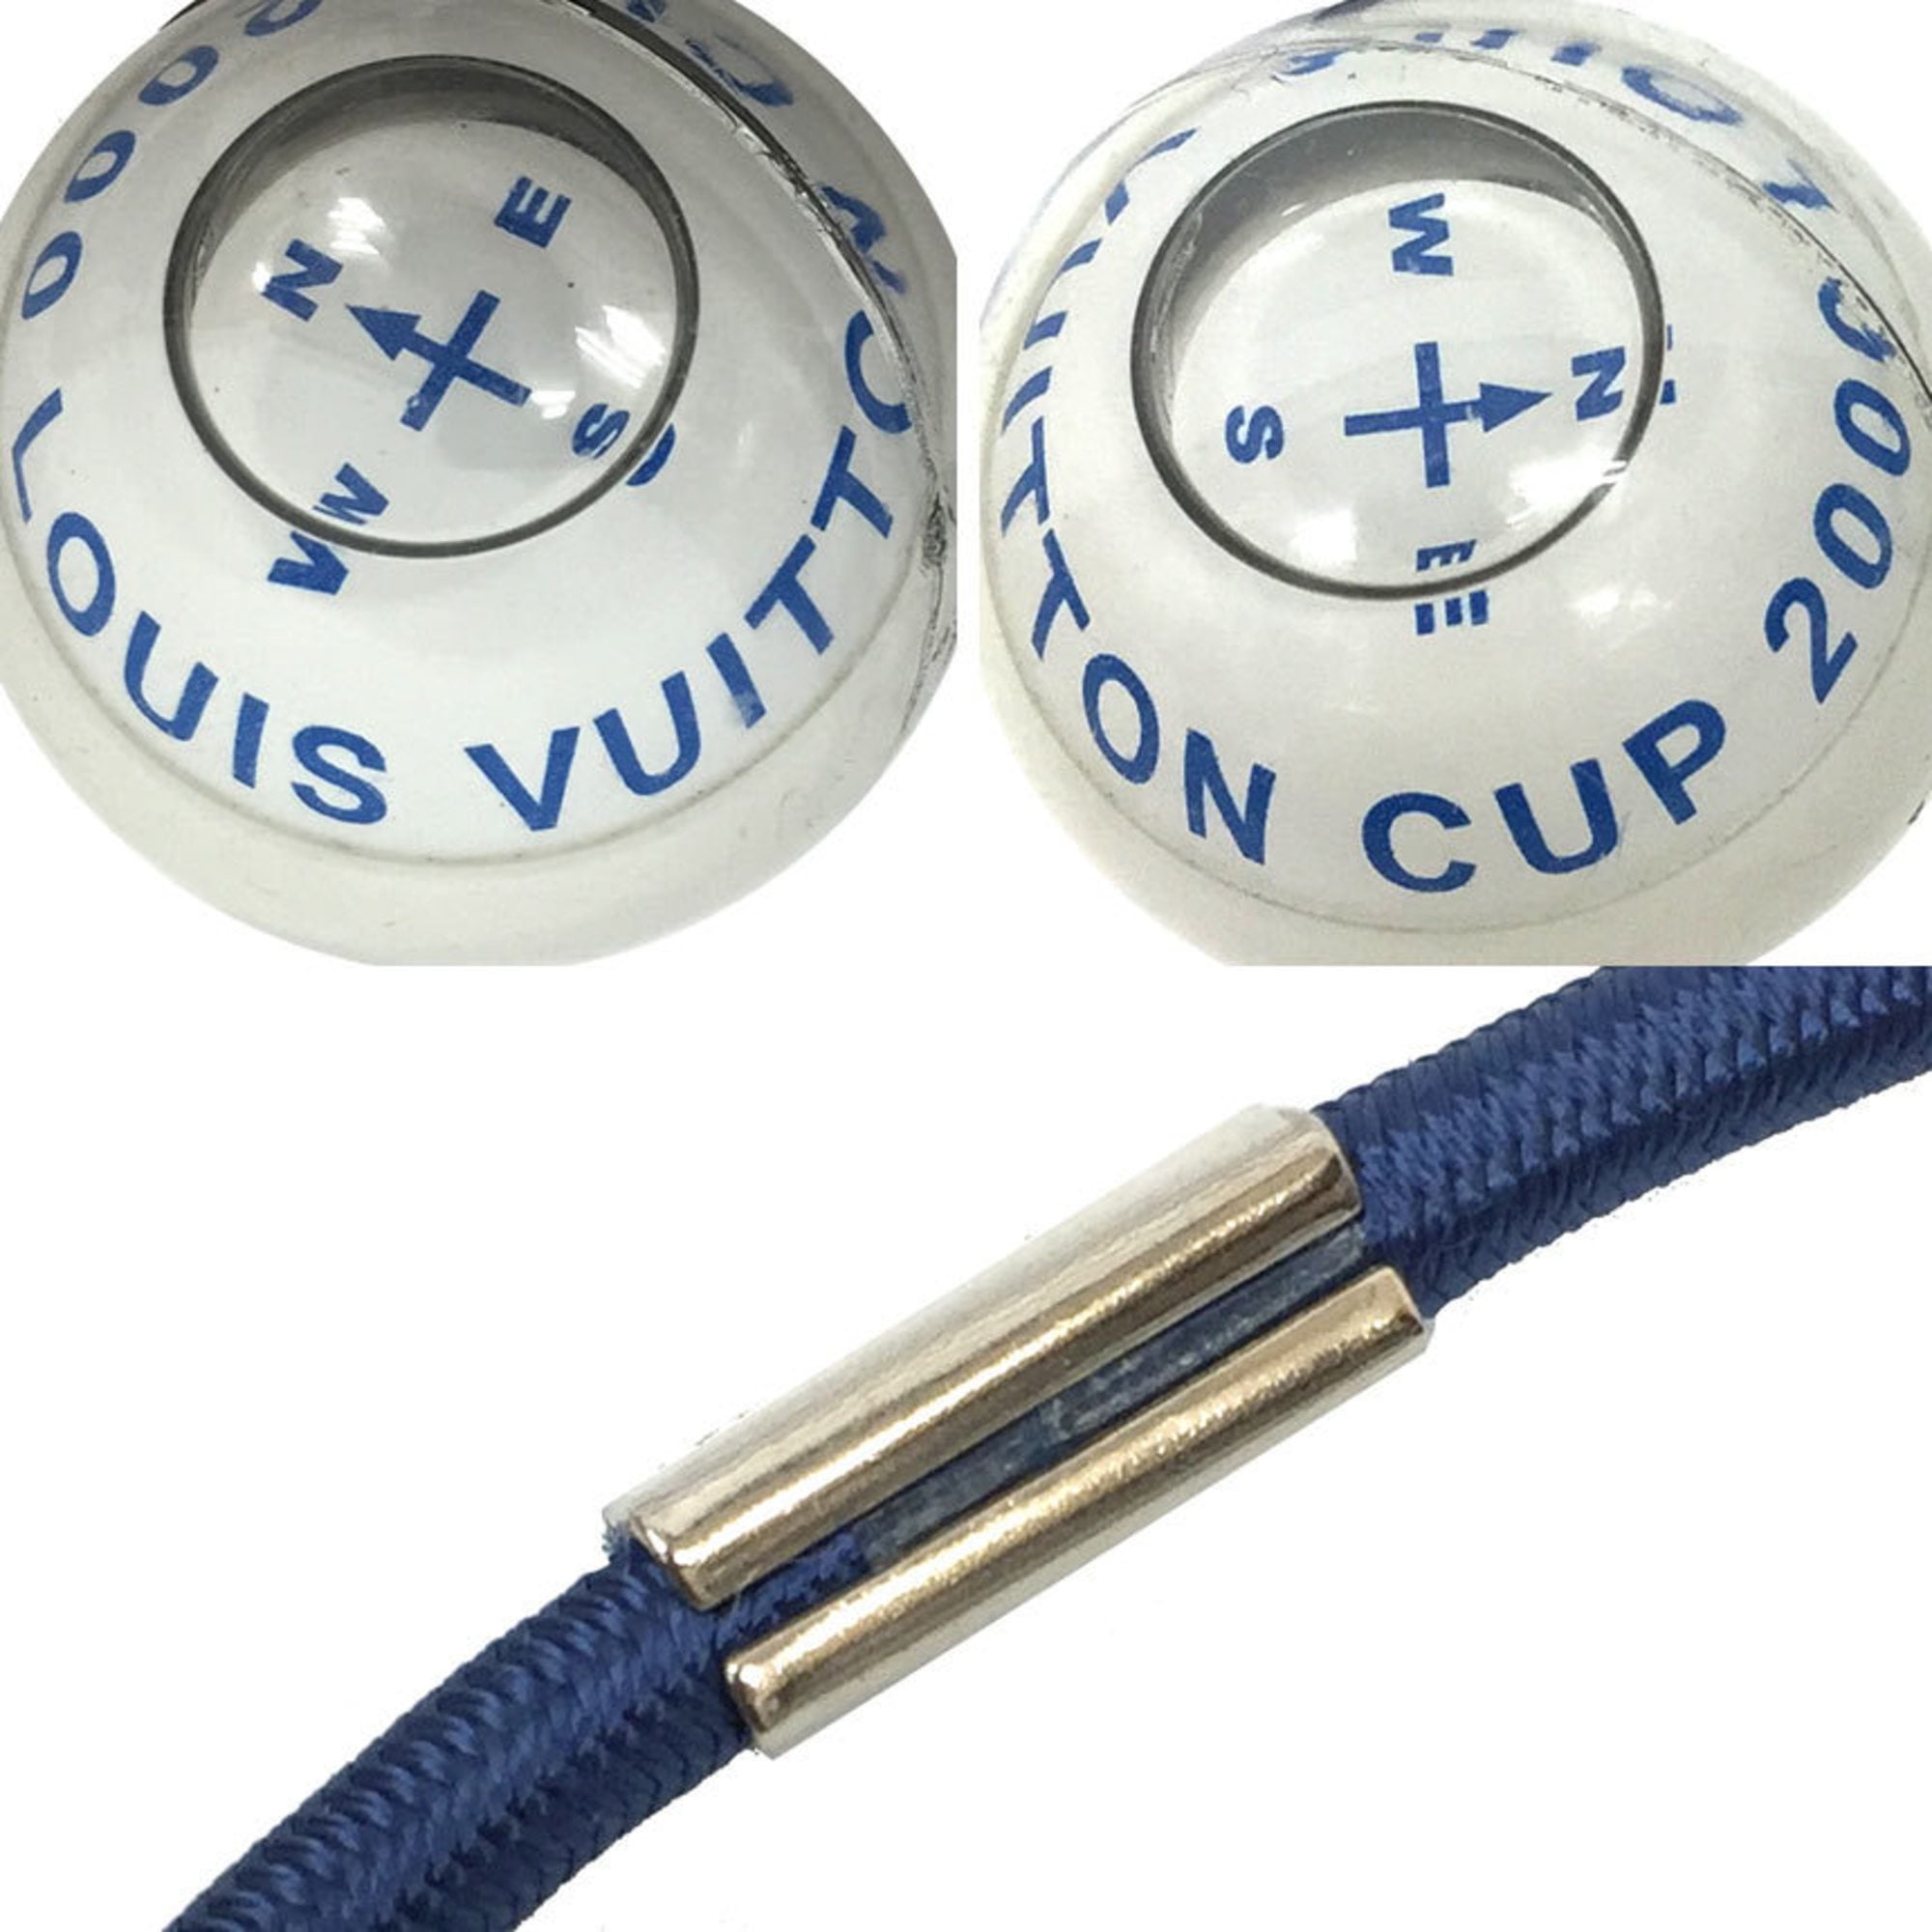 Louis Vuitton, Jewelry, Authentic Louis Vuitton Lv Cup 200 Compass